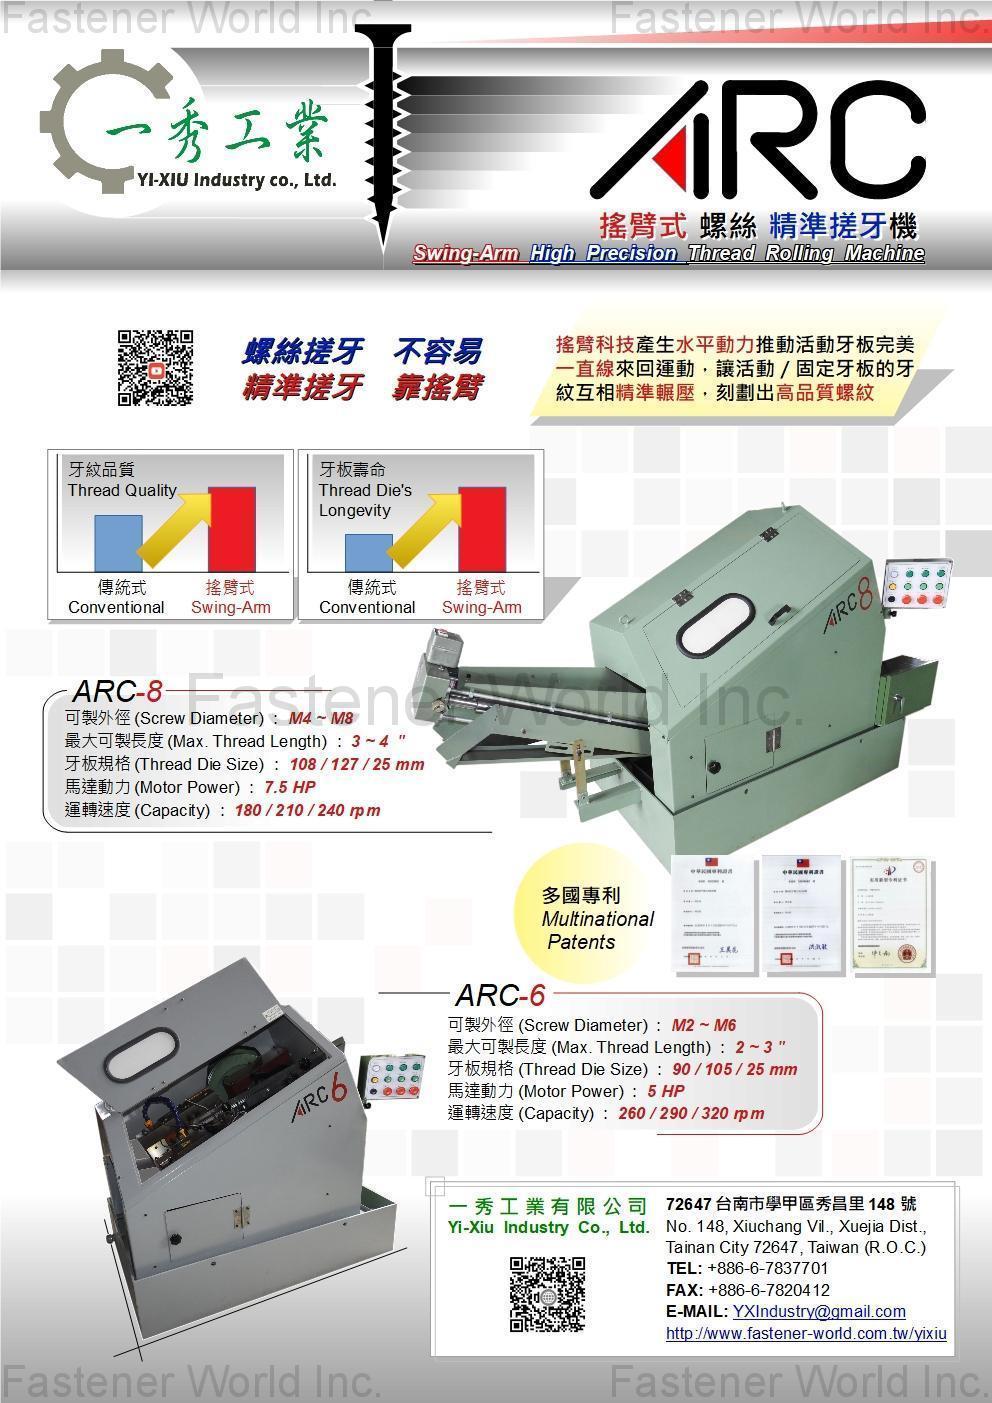 YI-XIU INDUSTRY CO., LTD. , Swing-Arm High Precision Thread Rolling Machine , Thread Rolling Machine